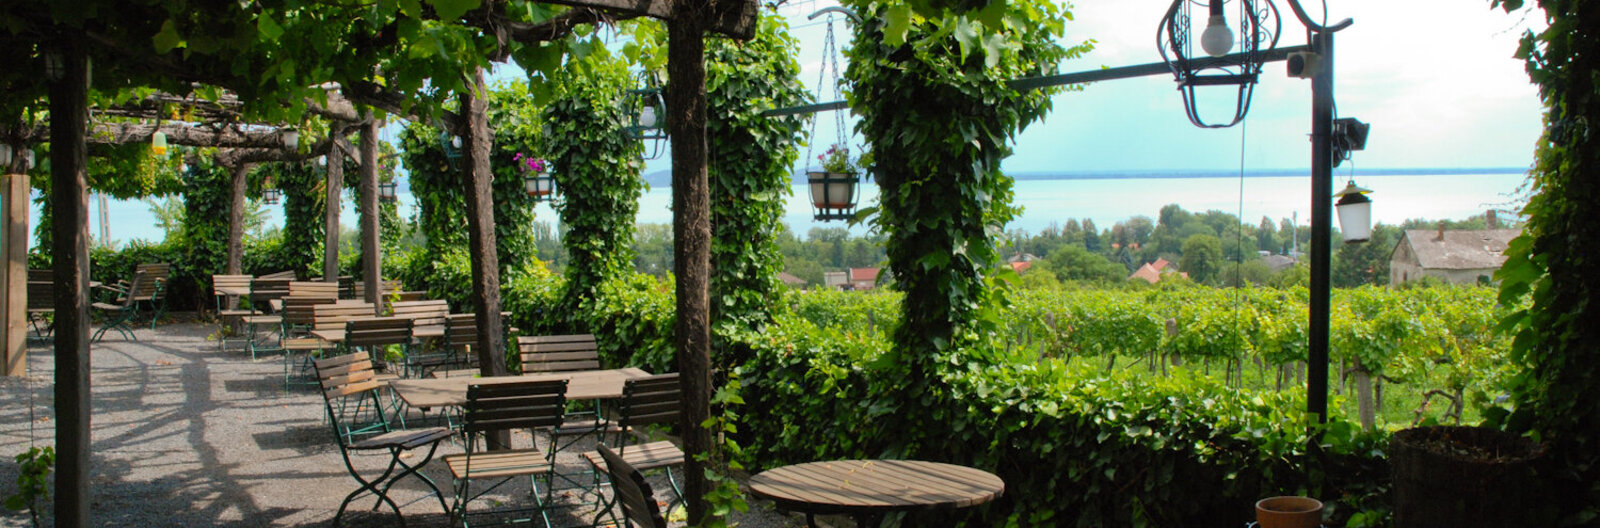 Drink wine in an arboretum! - 10 must-see wine terraces at Lake Balaton